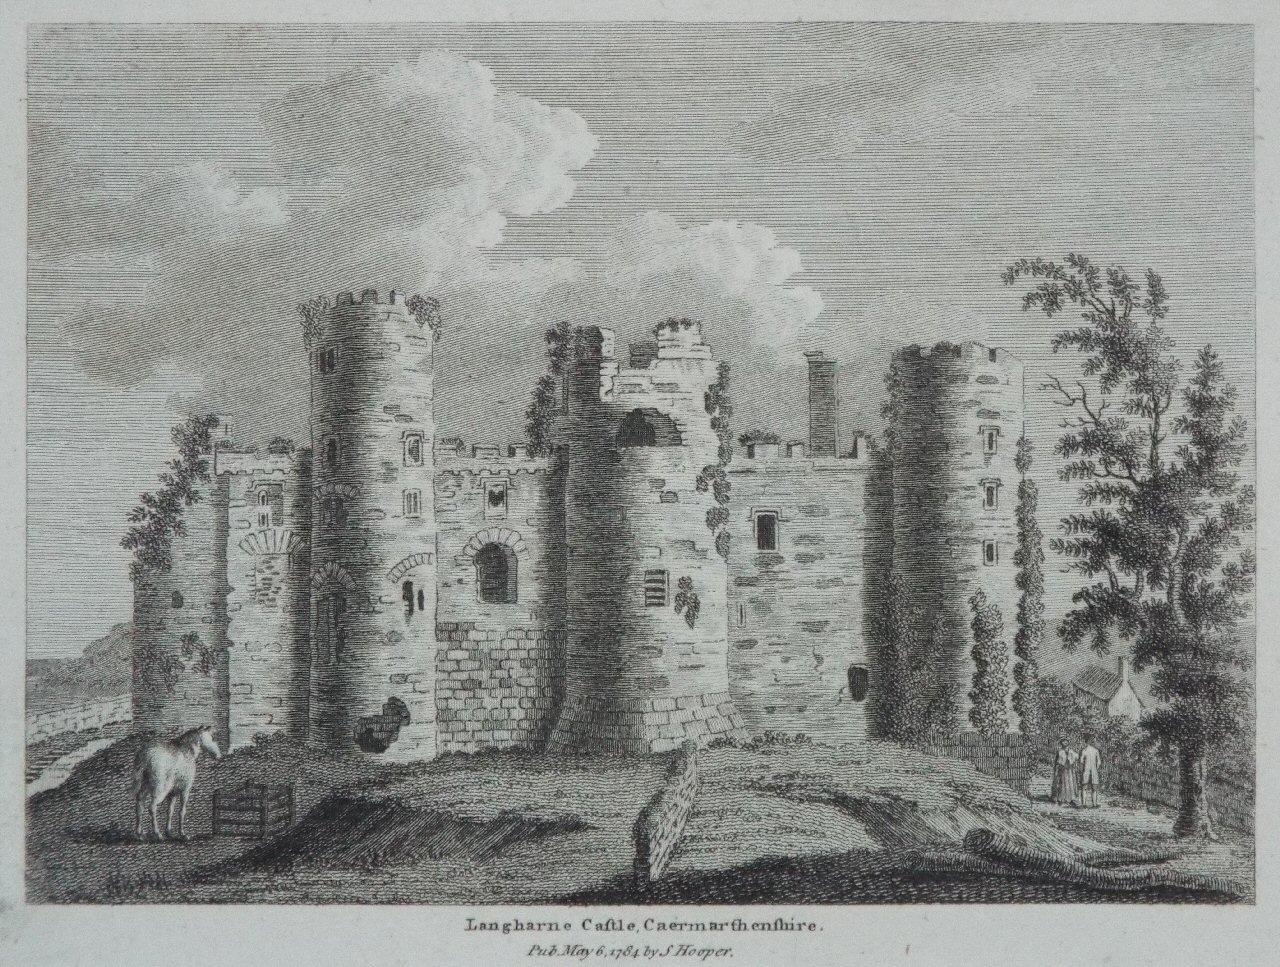 Print - Lanfharne Castle, Caermarthenshire.